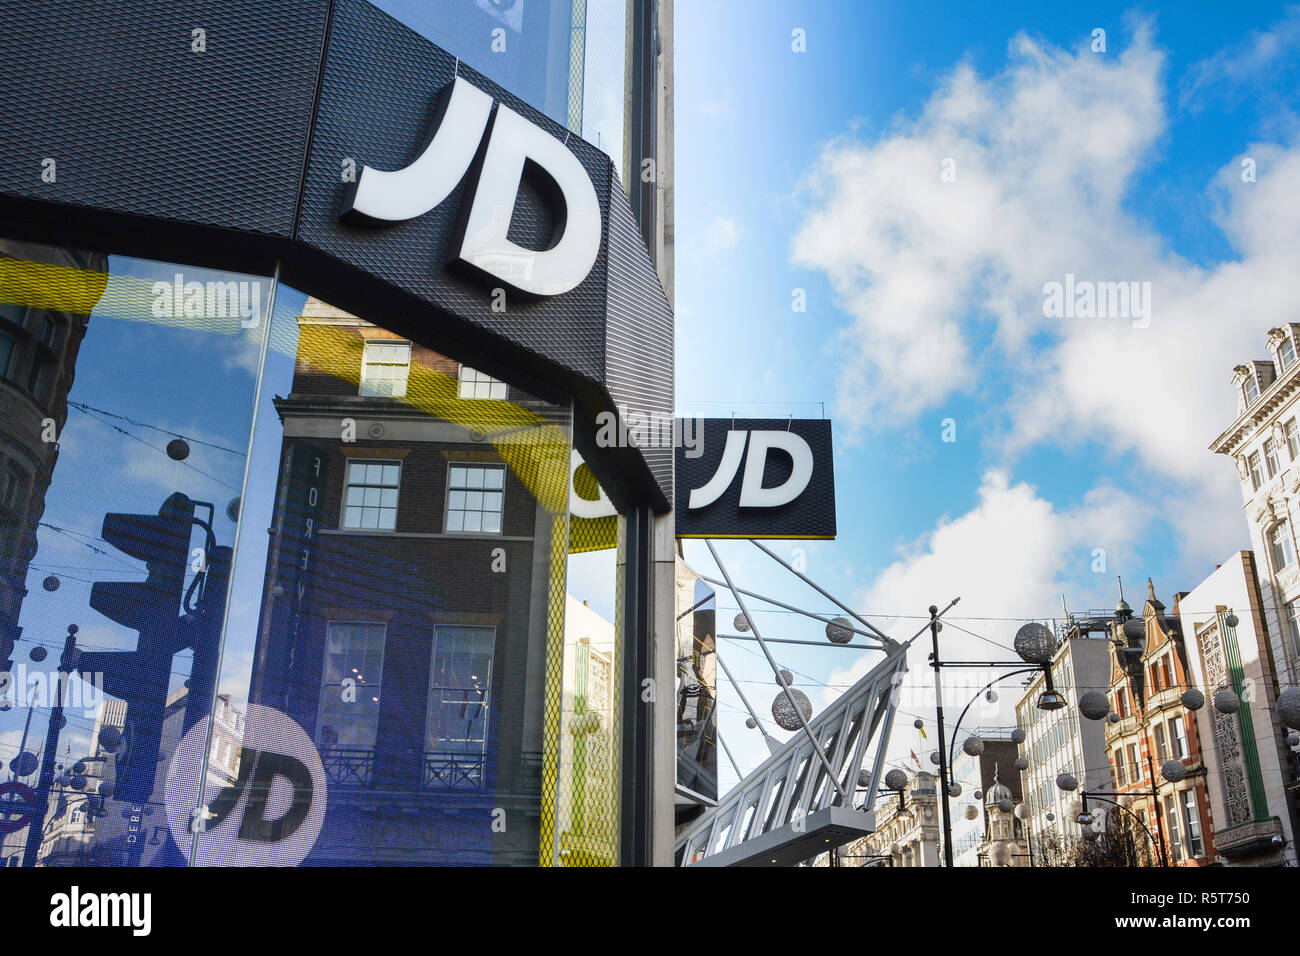 Magasin de sport JD sur Oxford Street, London, UK Banque D'Images